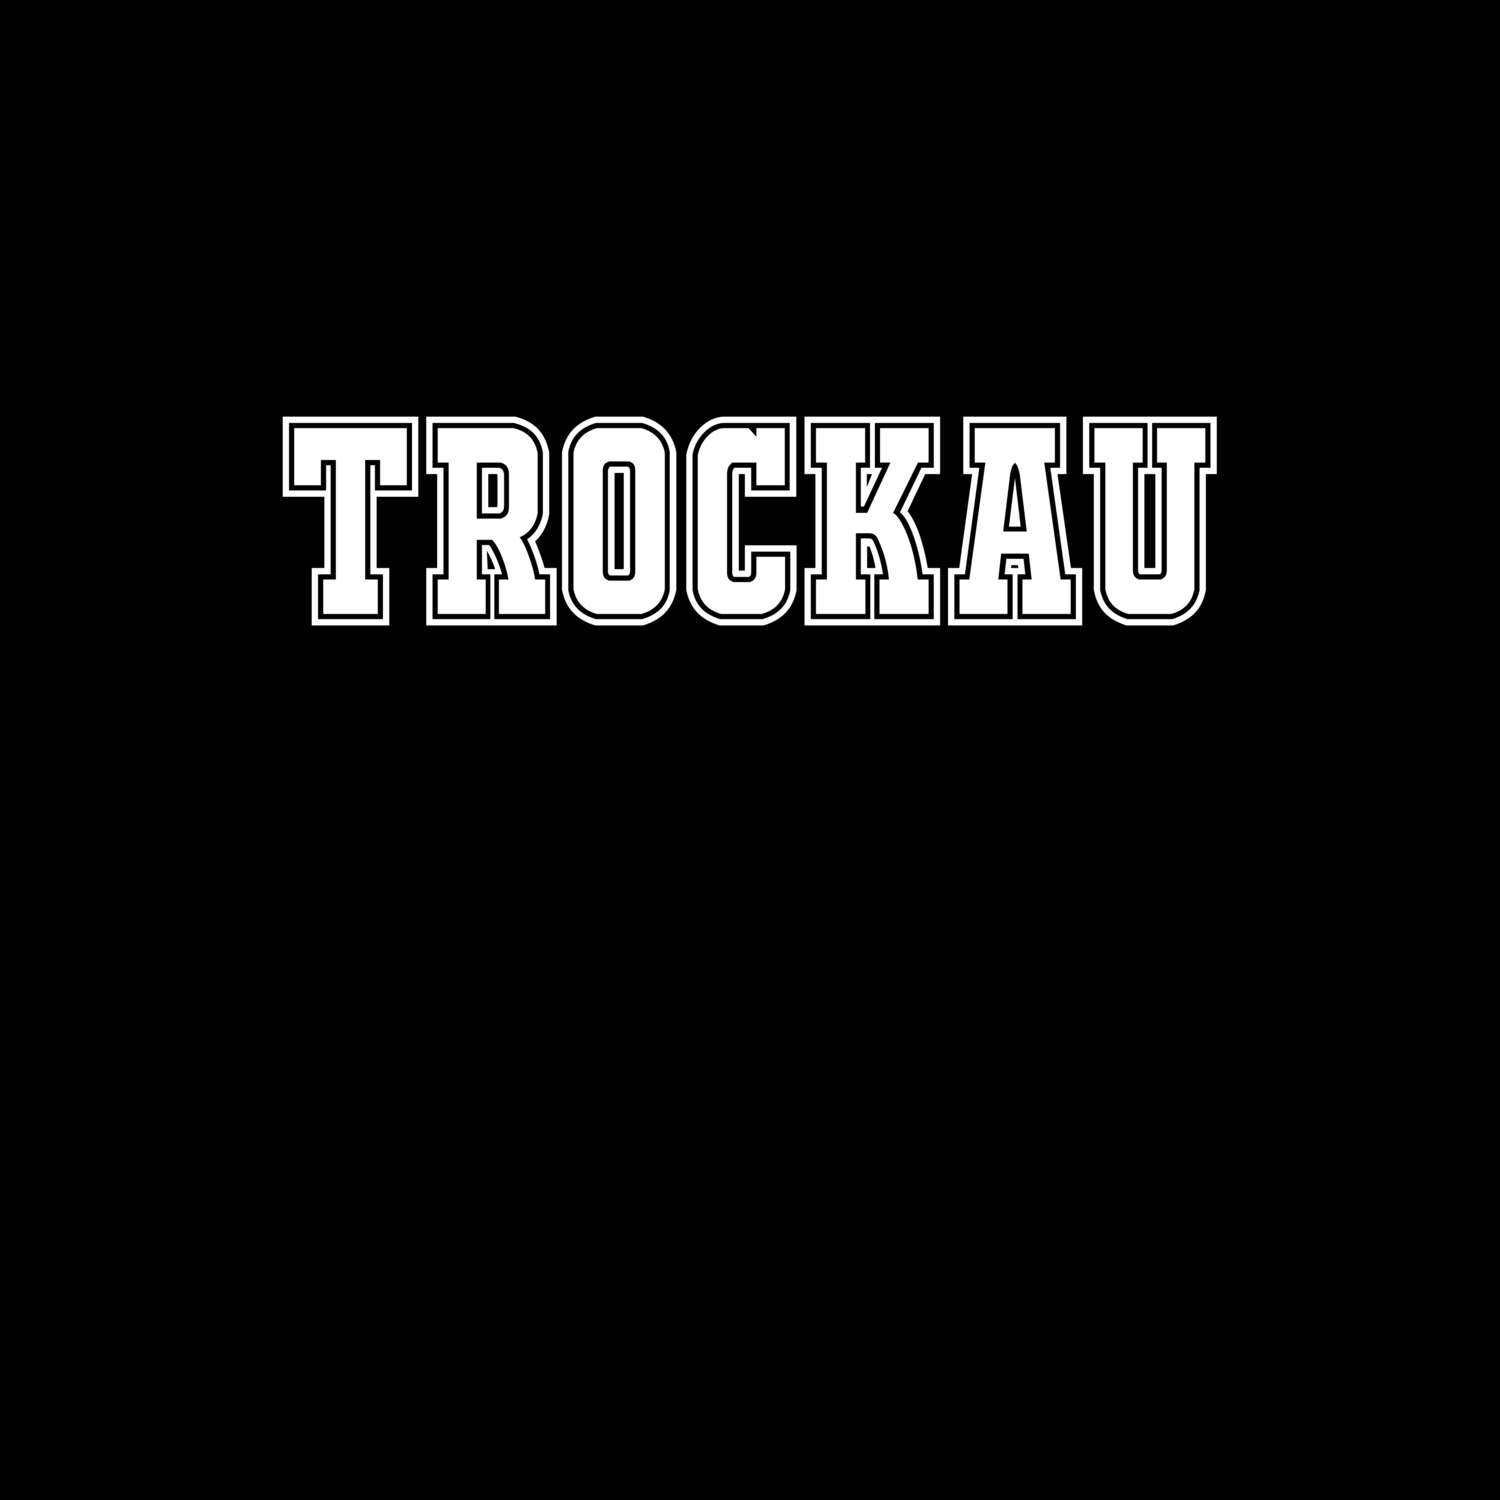 Trockau T-Shirt »Classic«